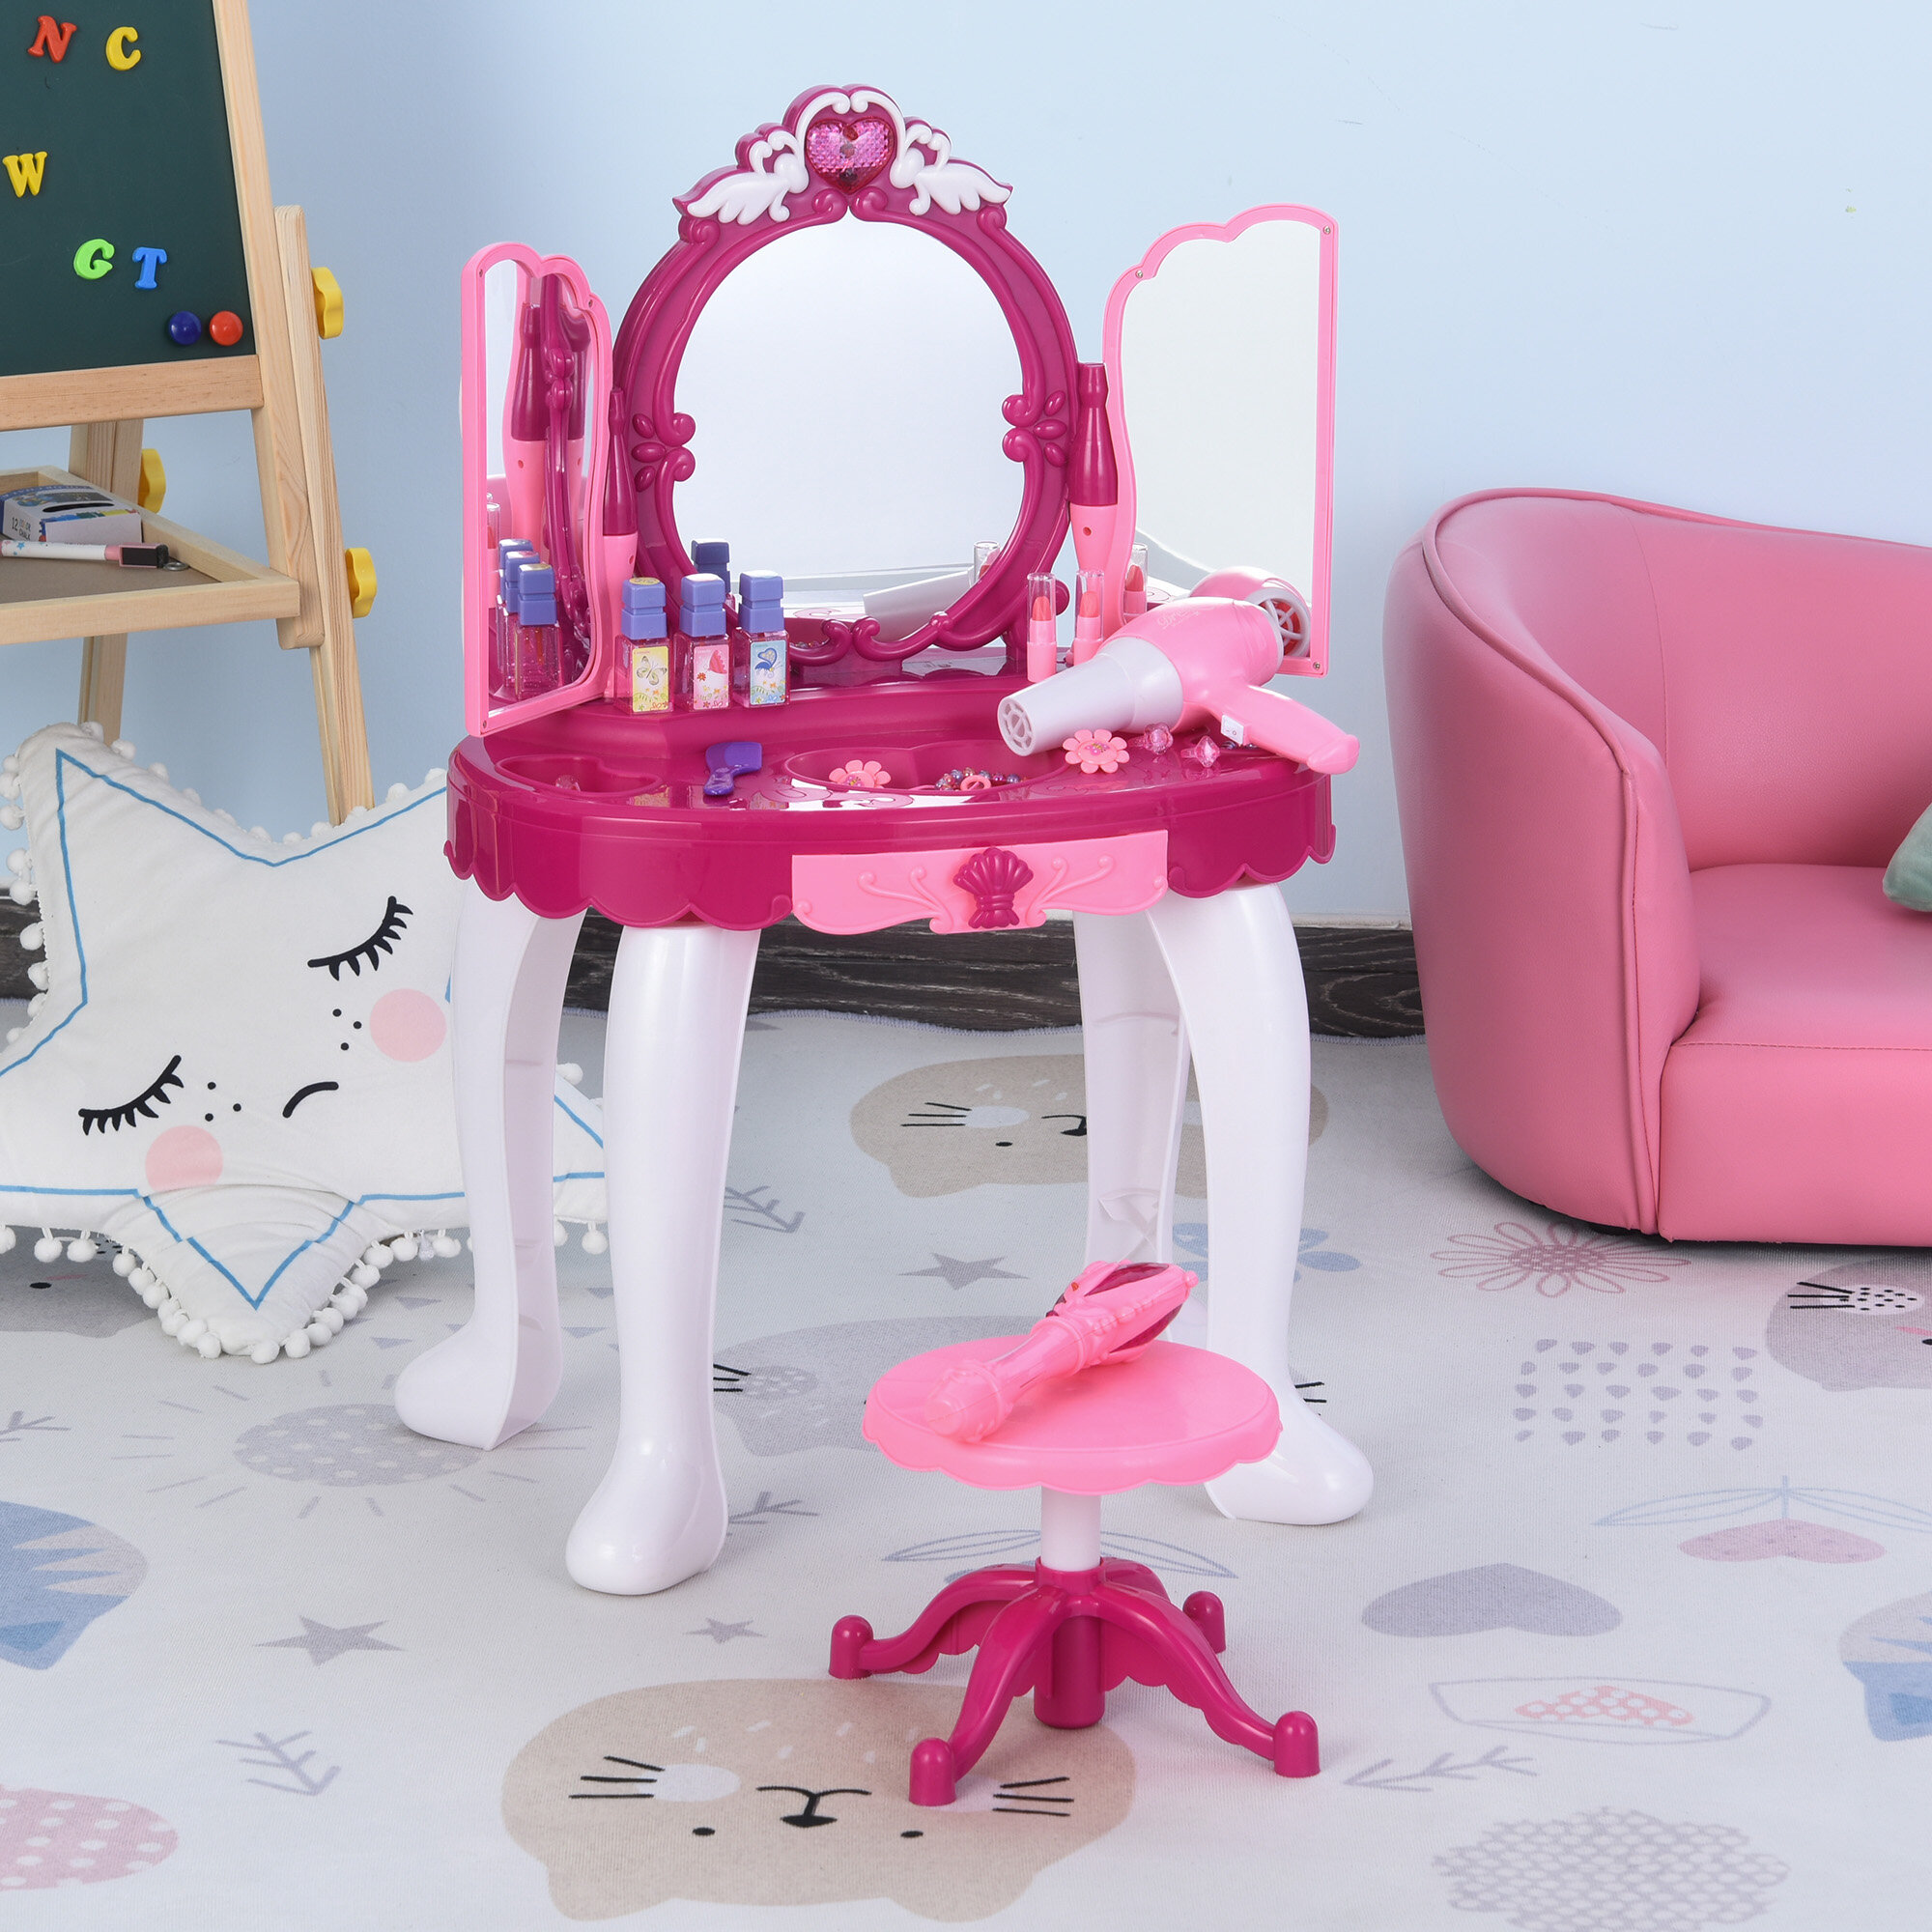 1:12TH Dollhouse Miniature Ladder Pretend Play Props Kids Toys